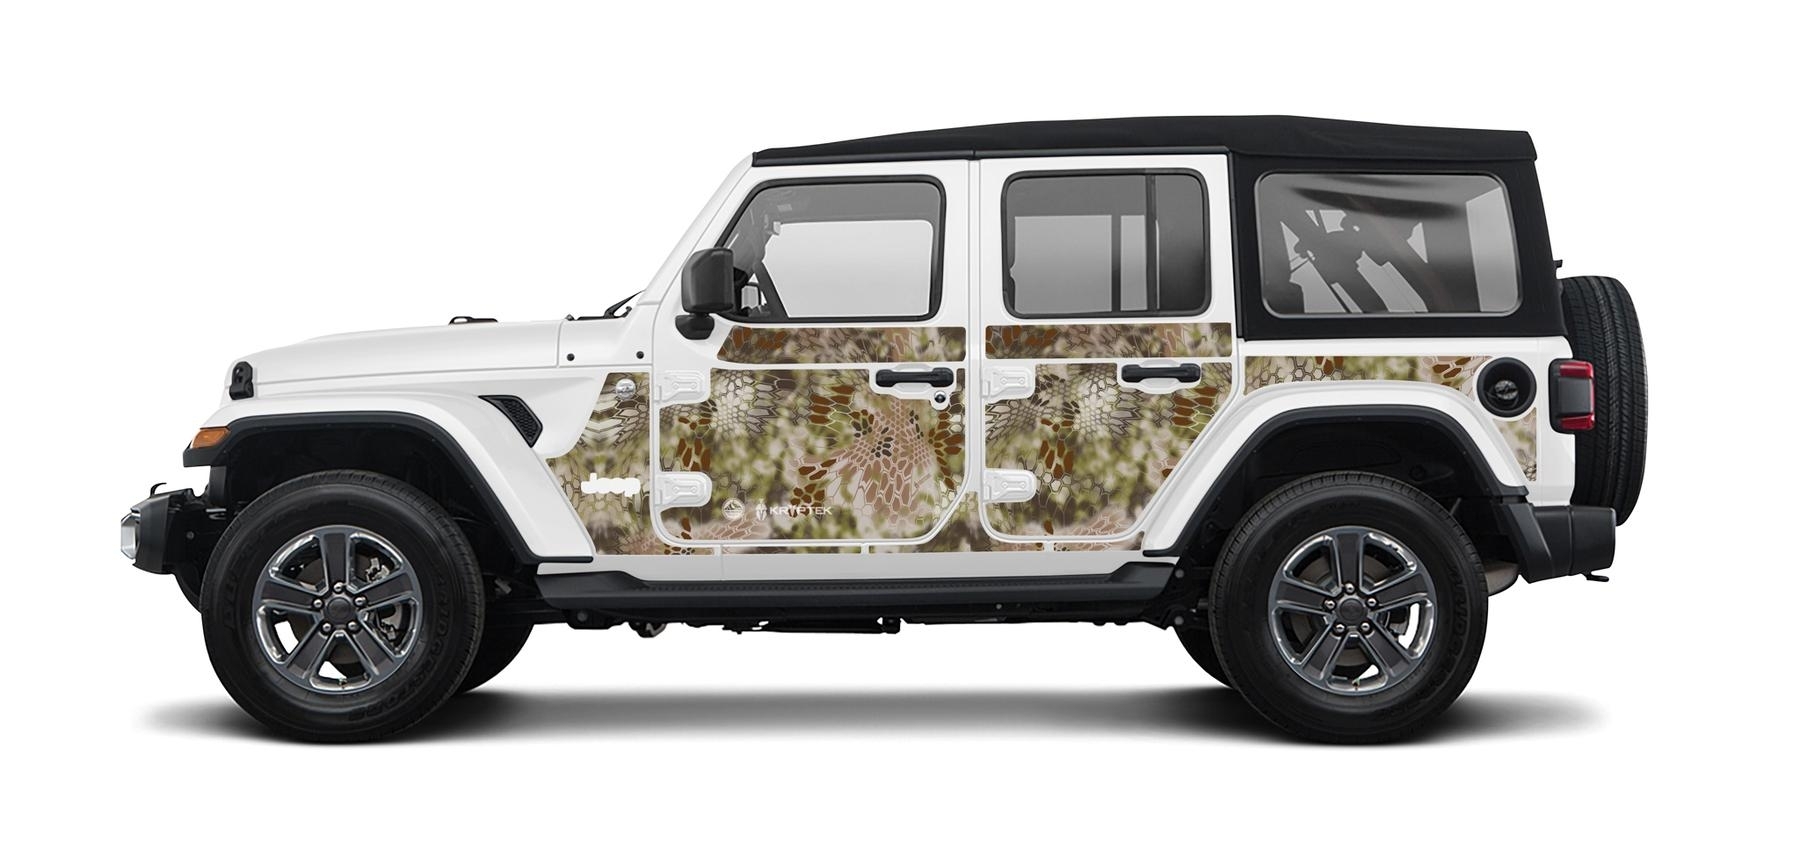 Mek Magnet Kryptek Highlander Desert Camo Magnetic Trail Armor For Jeep Wrangler Jl Unlimited